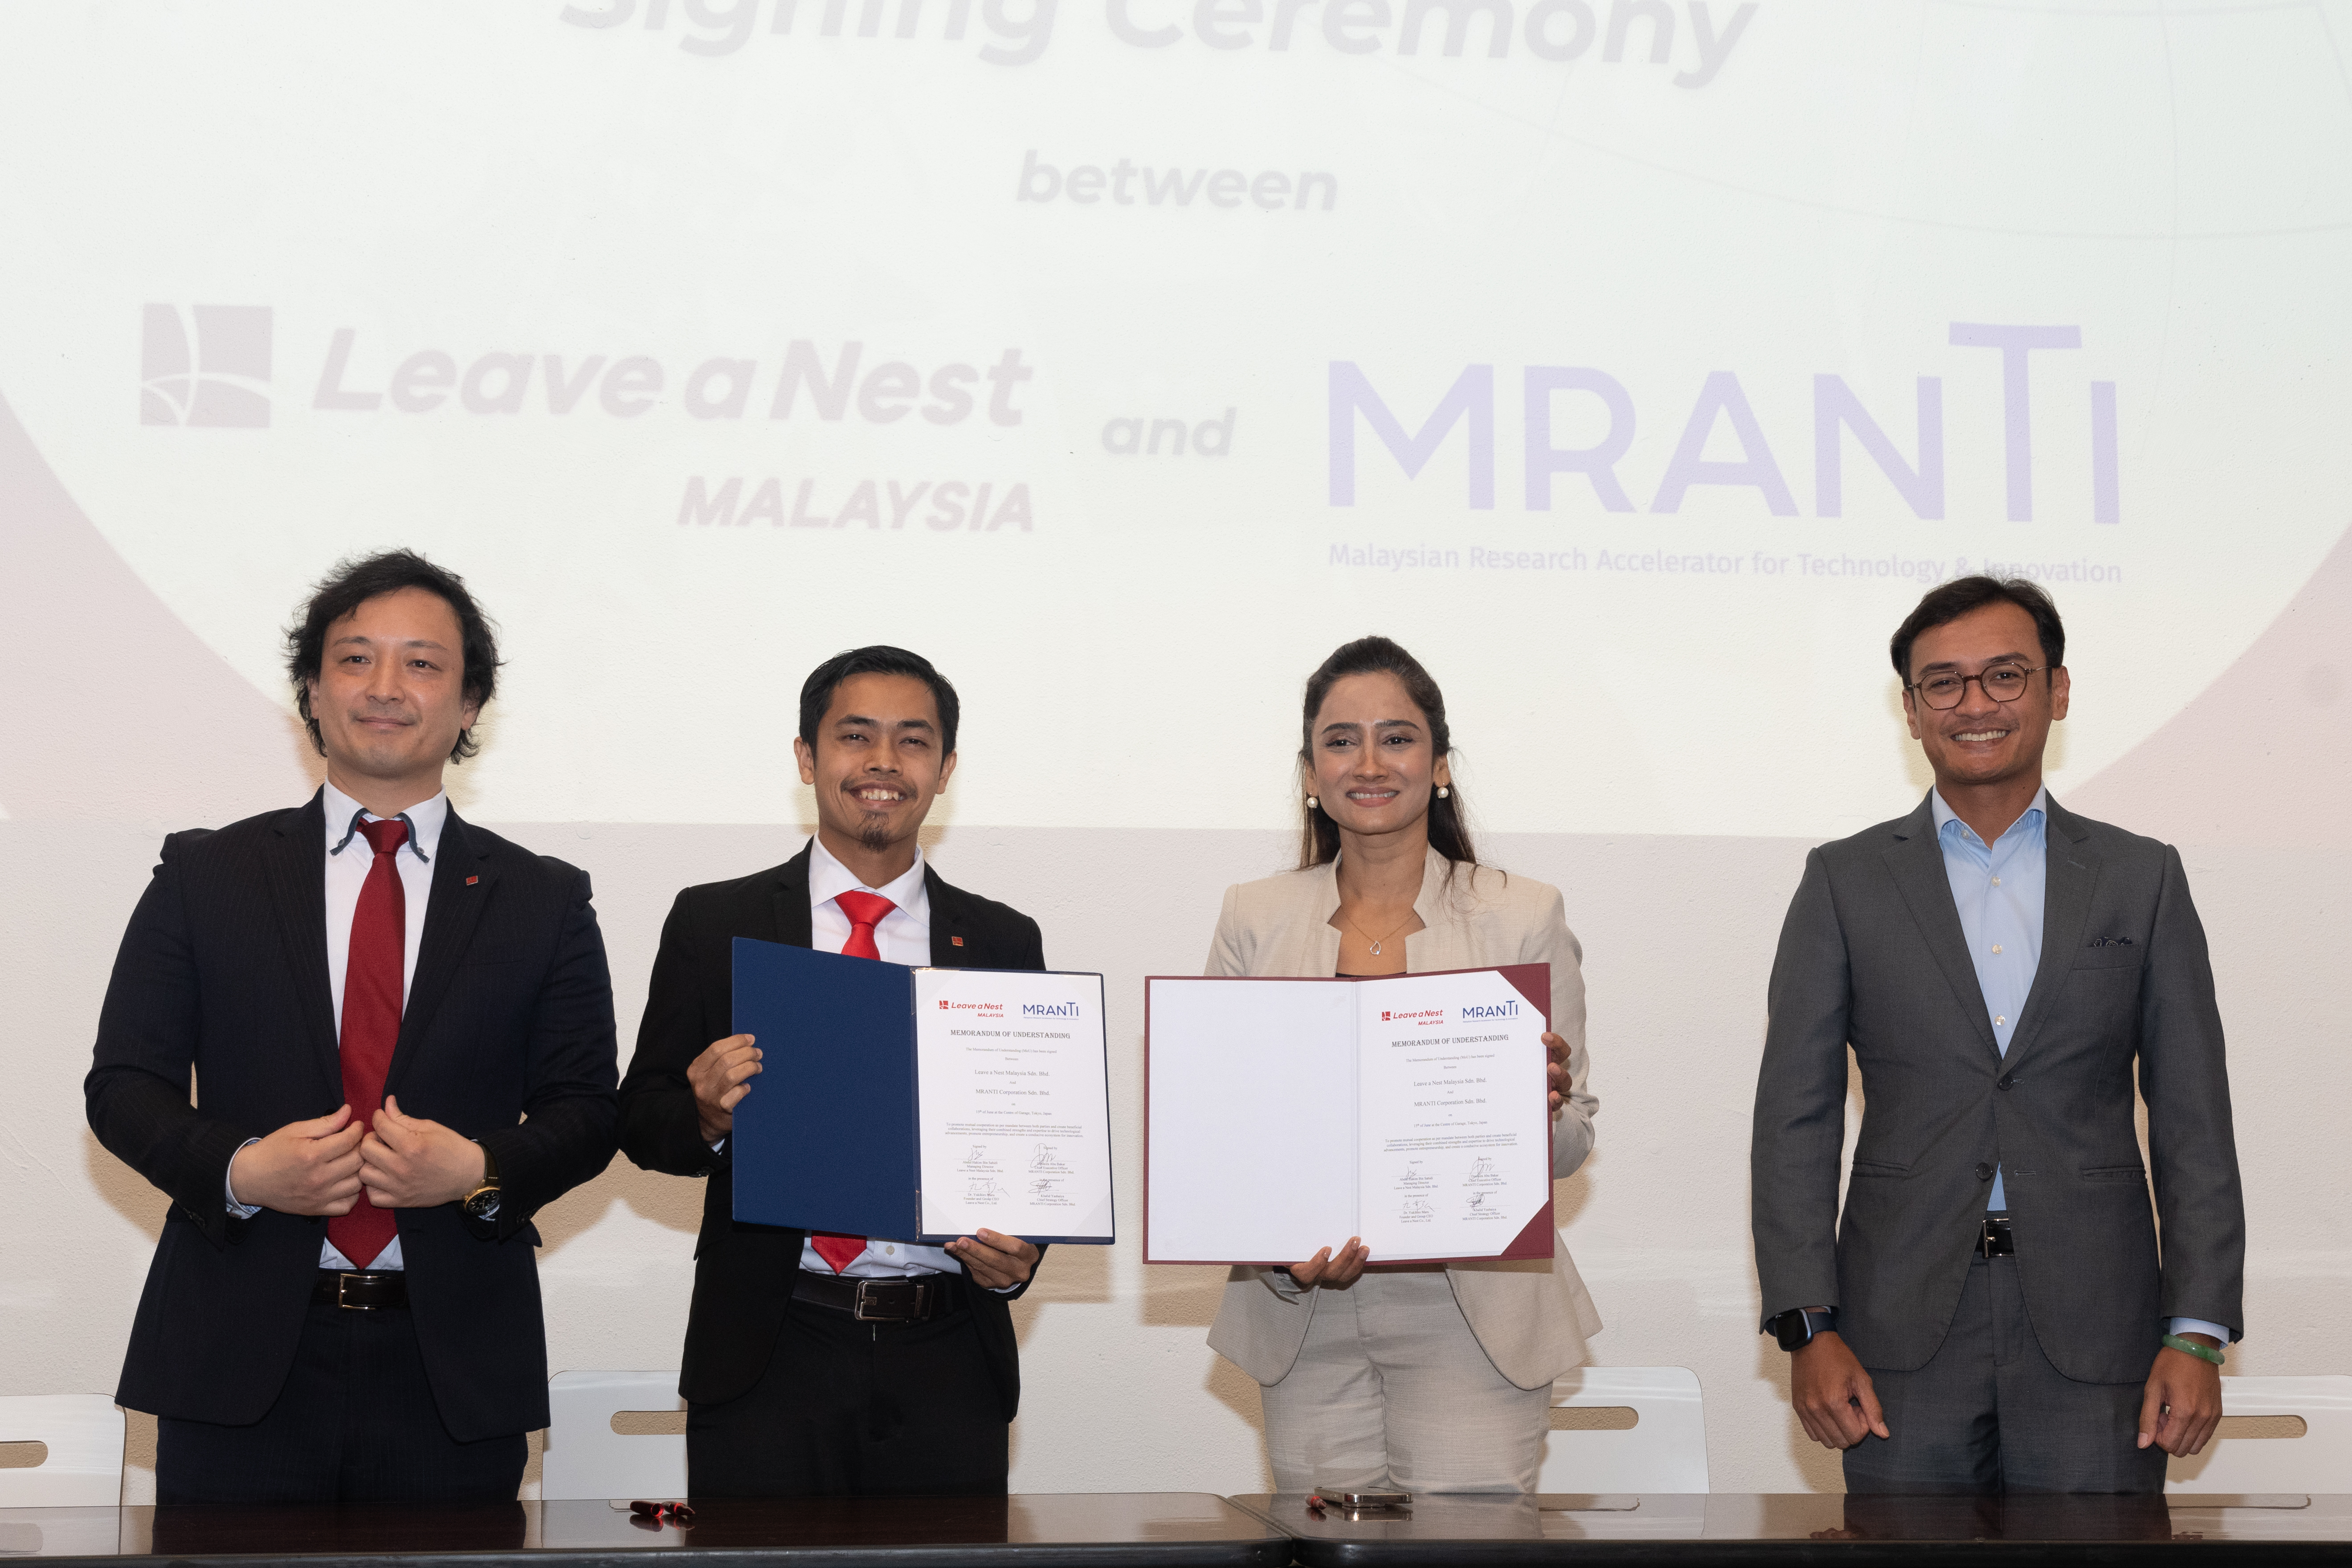 (L to R) Yukihiro Maru, founder and Group CEO of Leave a Nest; Abdul Hakim Sahidi, MD of Leave a Nest Malaysia; Dzuleira Abu Bakar, CEO of MRANTI; and Khalid Yashaiya, CSO of MRANTI.